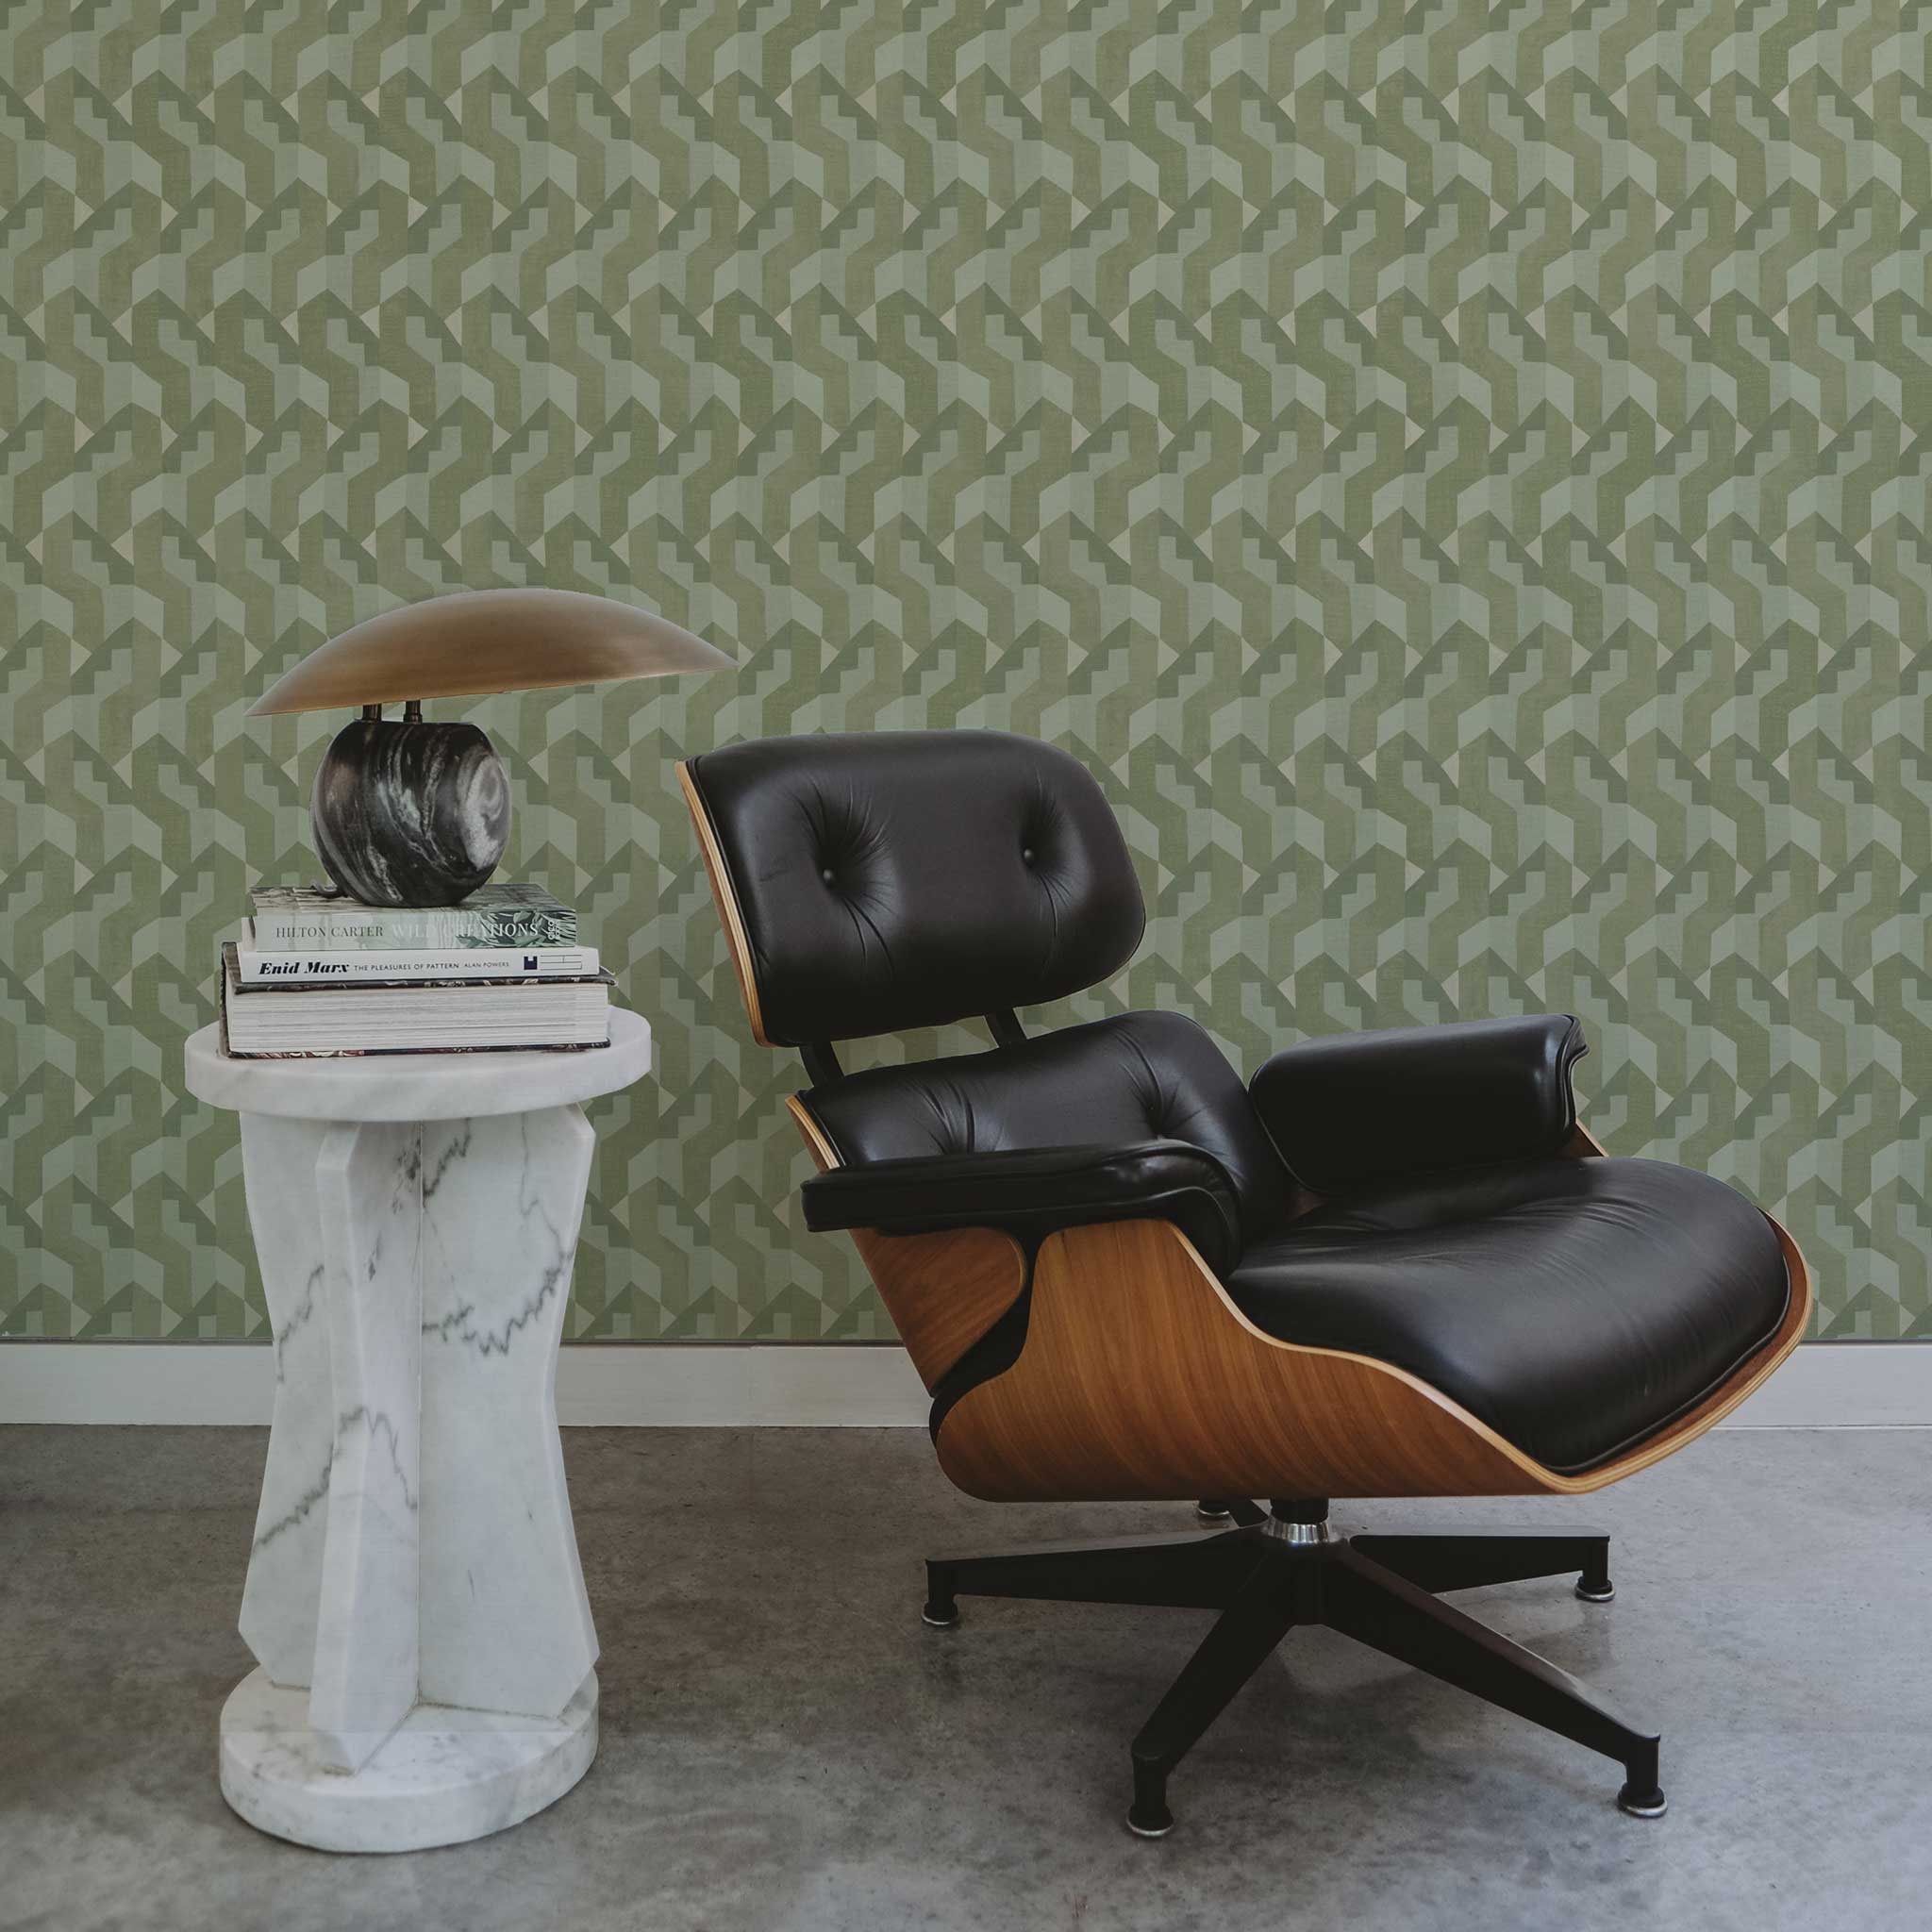 Habita wallpaper design - green Gio pattern in living room